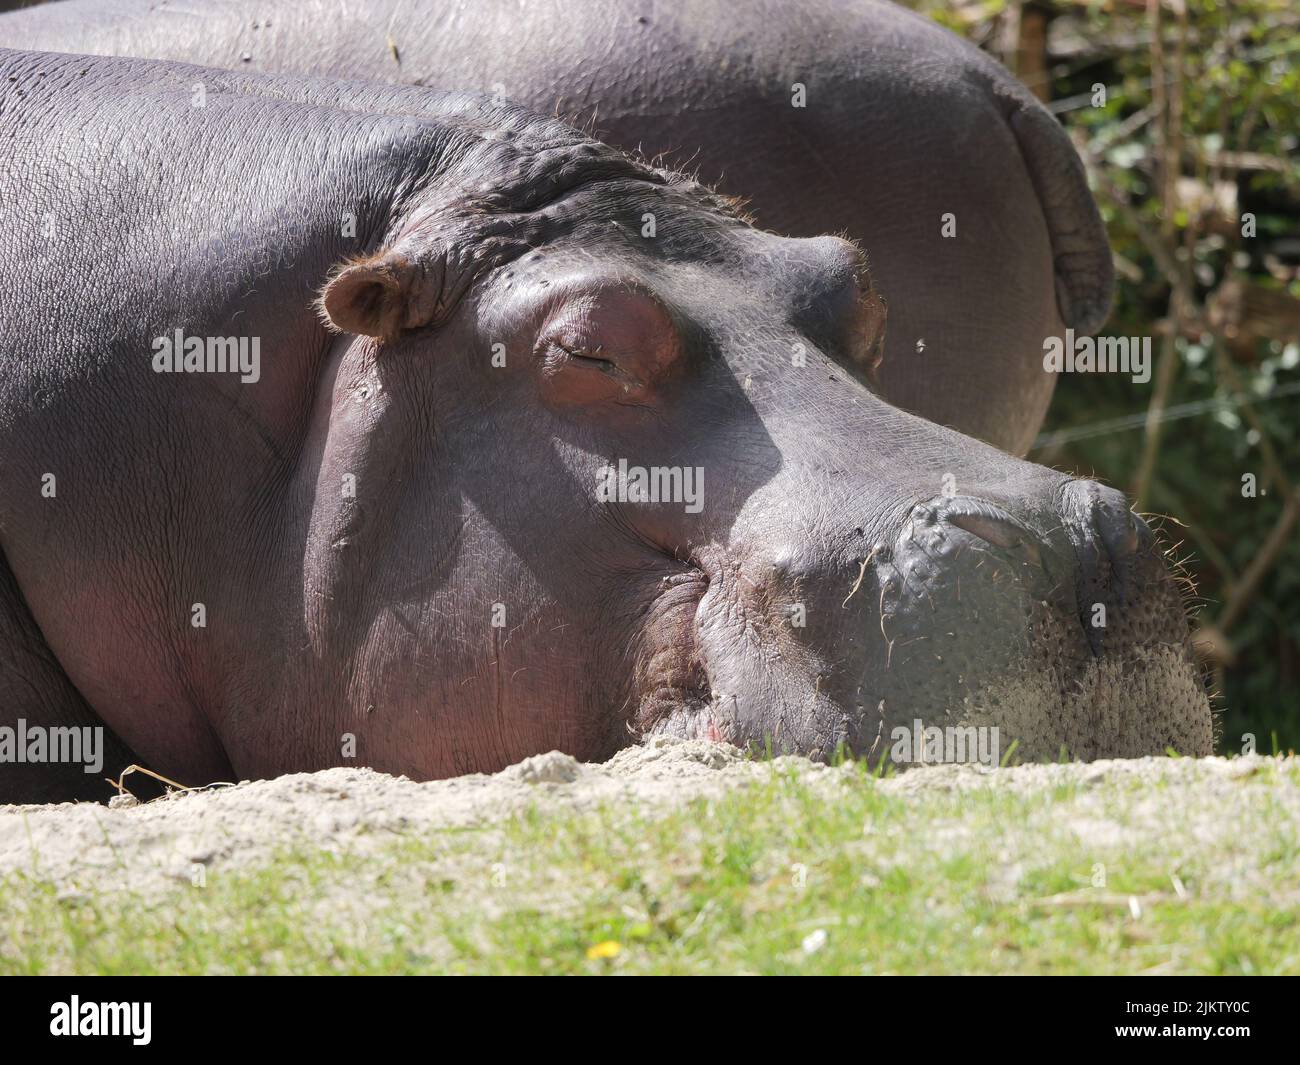 A cute hippopotamus sleeping on a sunny day Stock Photo